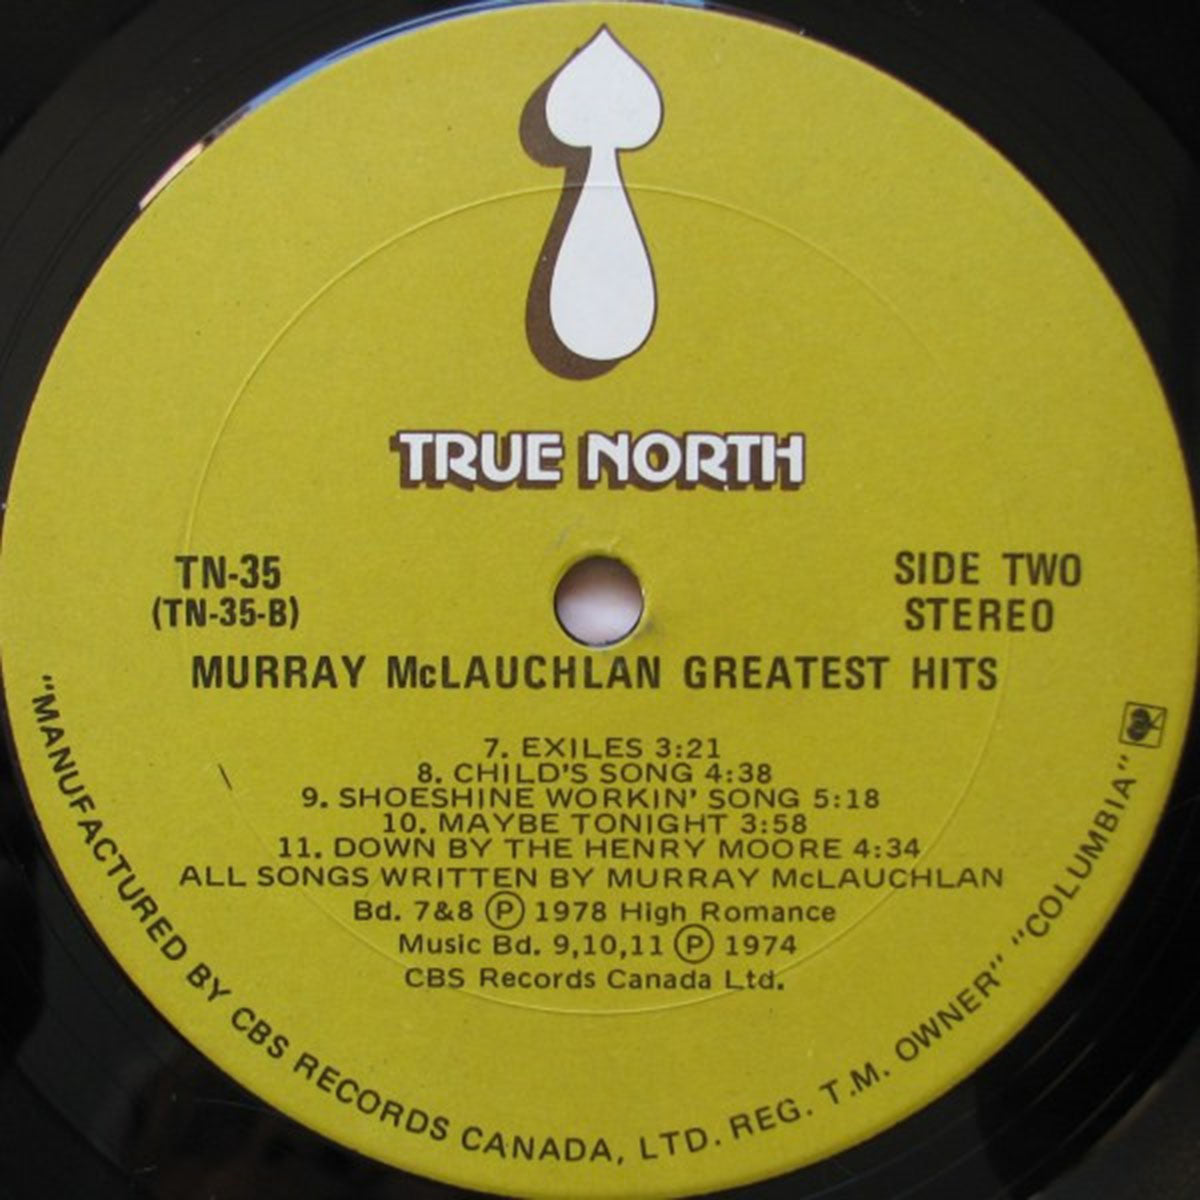 Murray McLauchlan – Greatest Hits